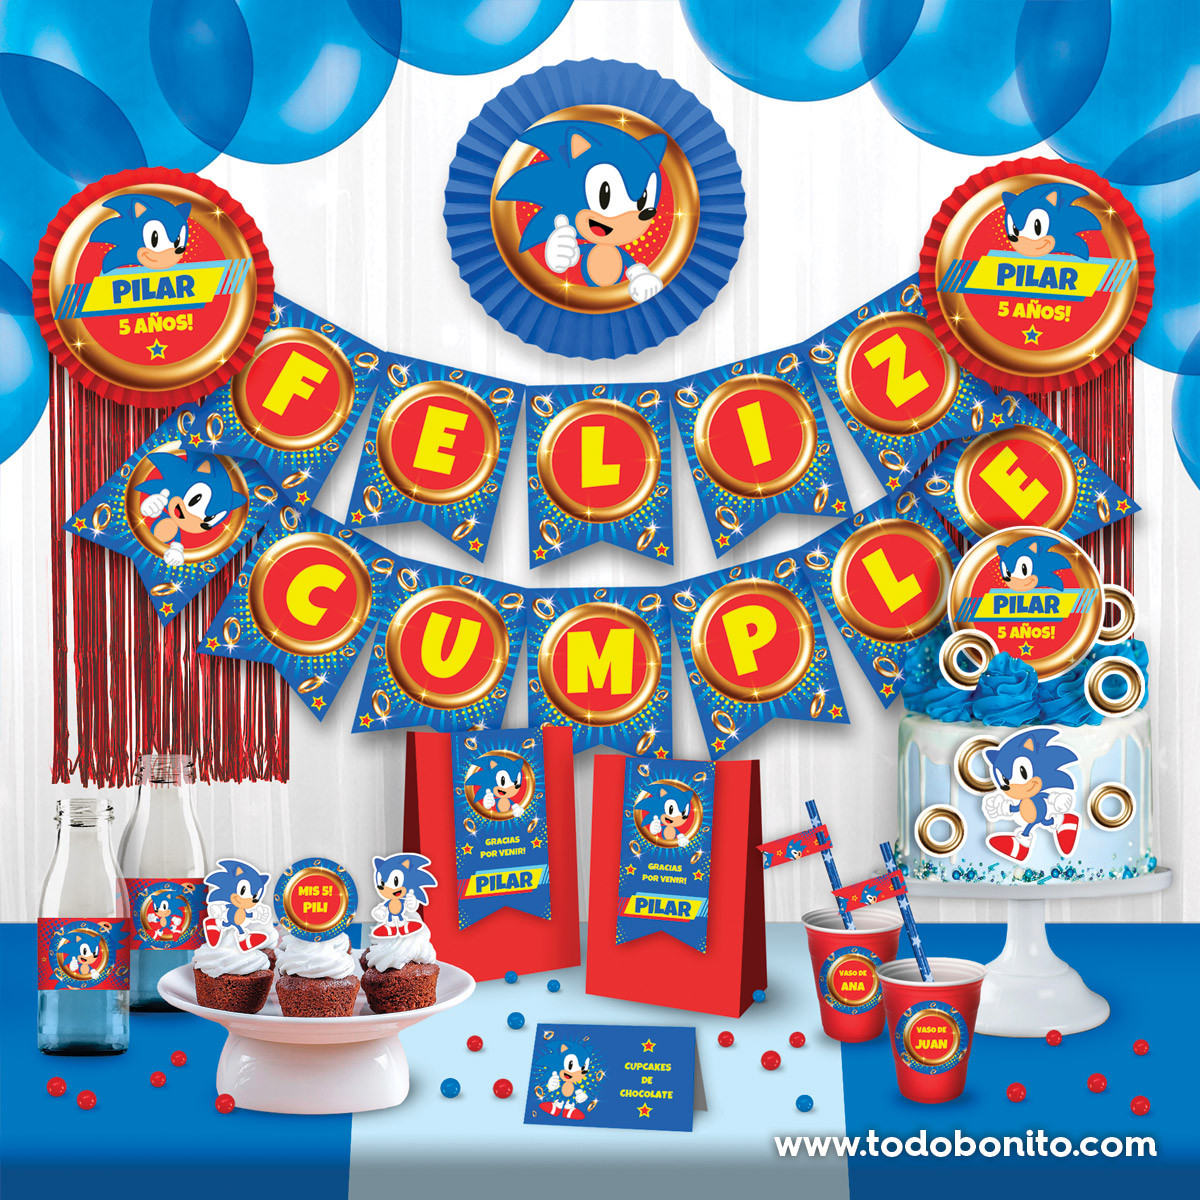 10 ideas de Sonic  disfraz sonic, fiesta de sonic, cumpleaños de sonic